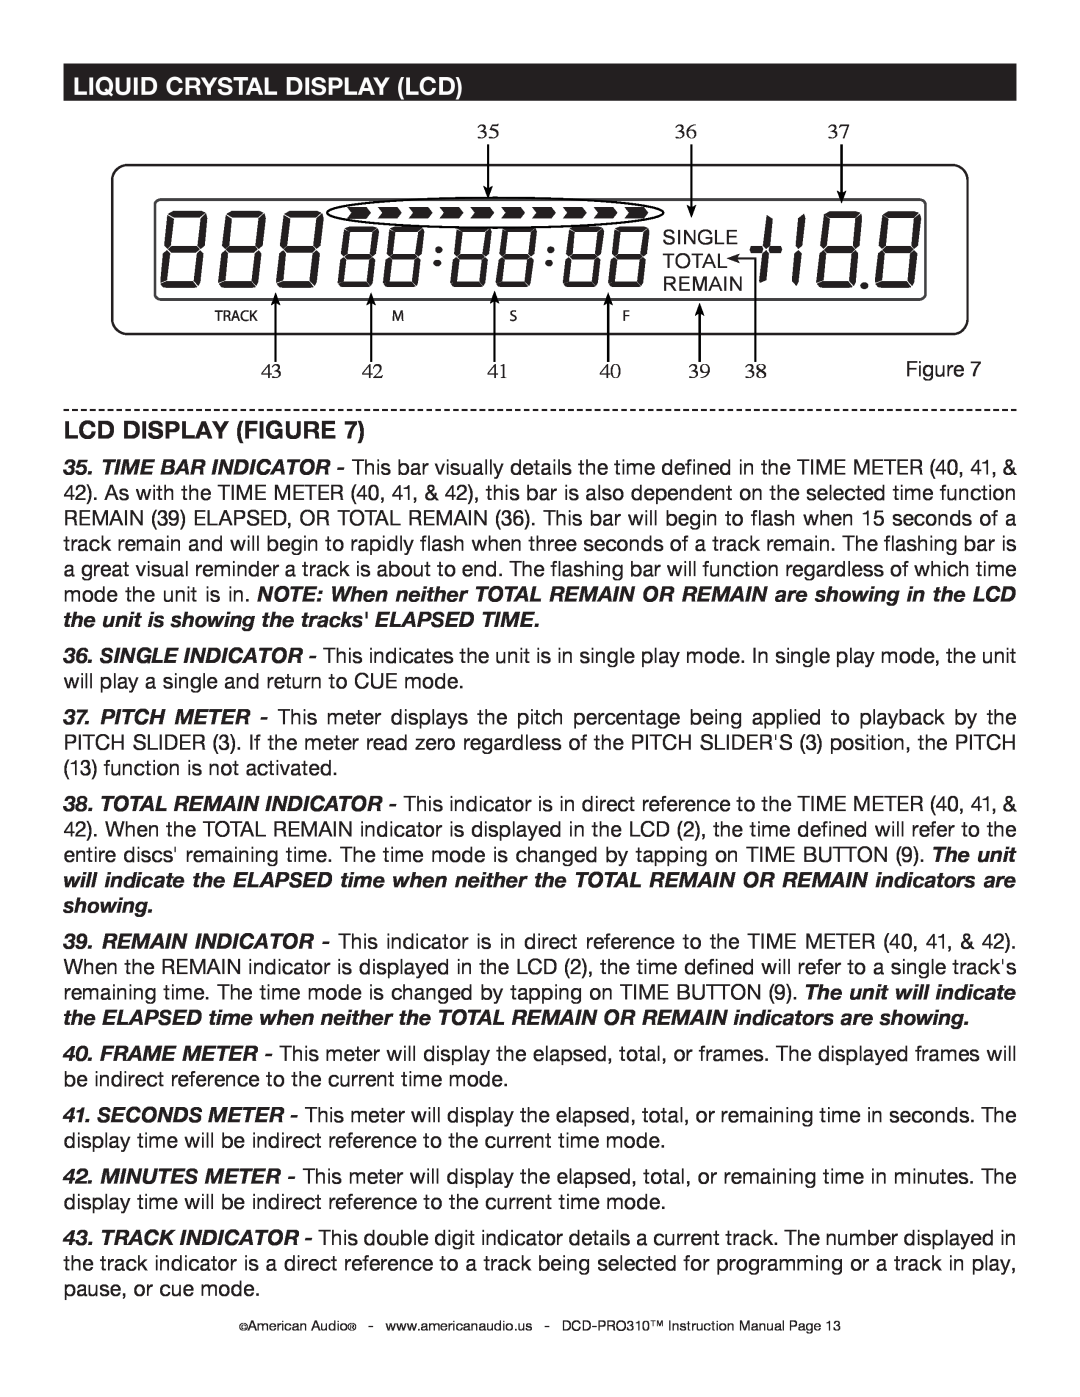 American Audio DCD-PRO310 operating instructions Liquid Crystal Display Lcd, Lcd Display Figure 